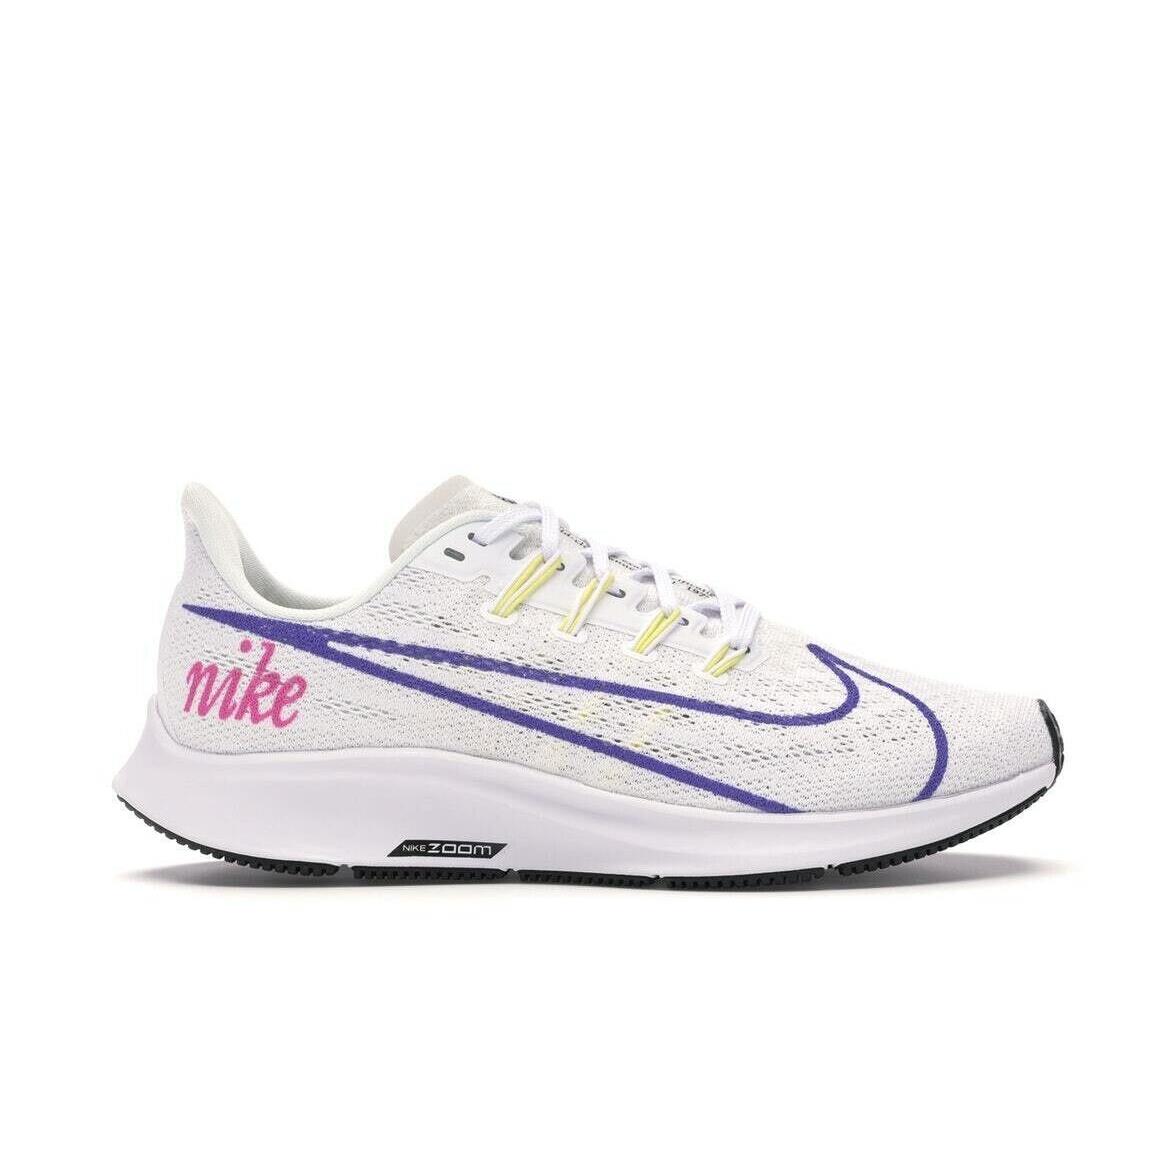 Nike Air Zoom Pegasus 36 Jdi Trainers Women`s Size 9 White Purple BV5740-101 - White